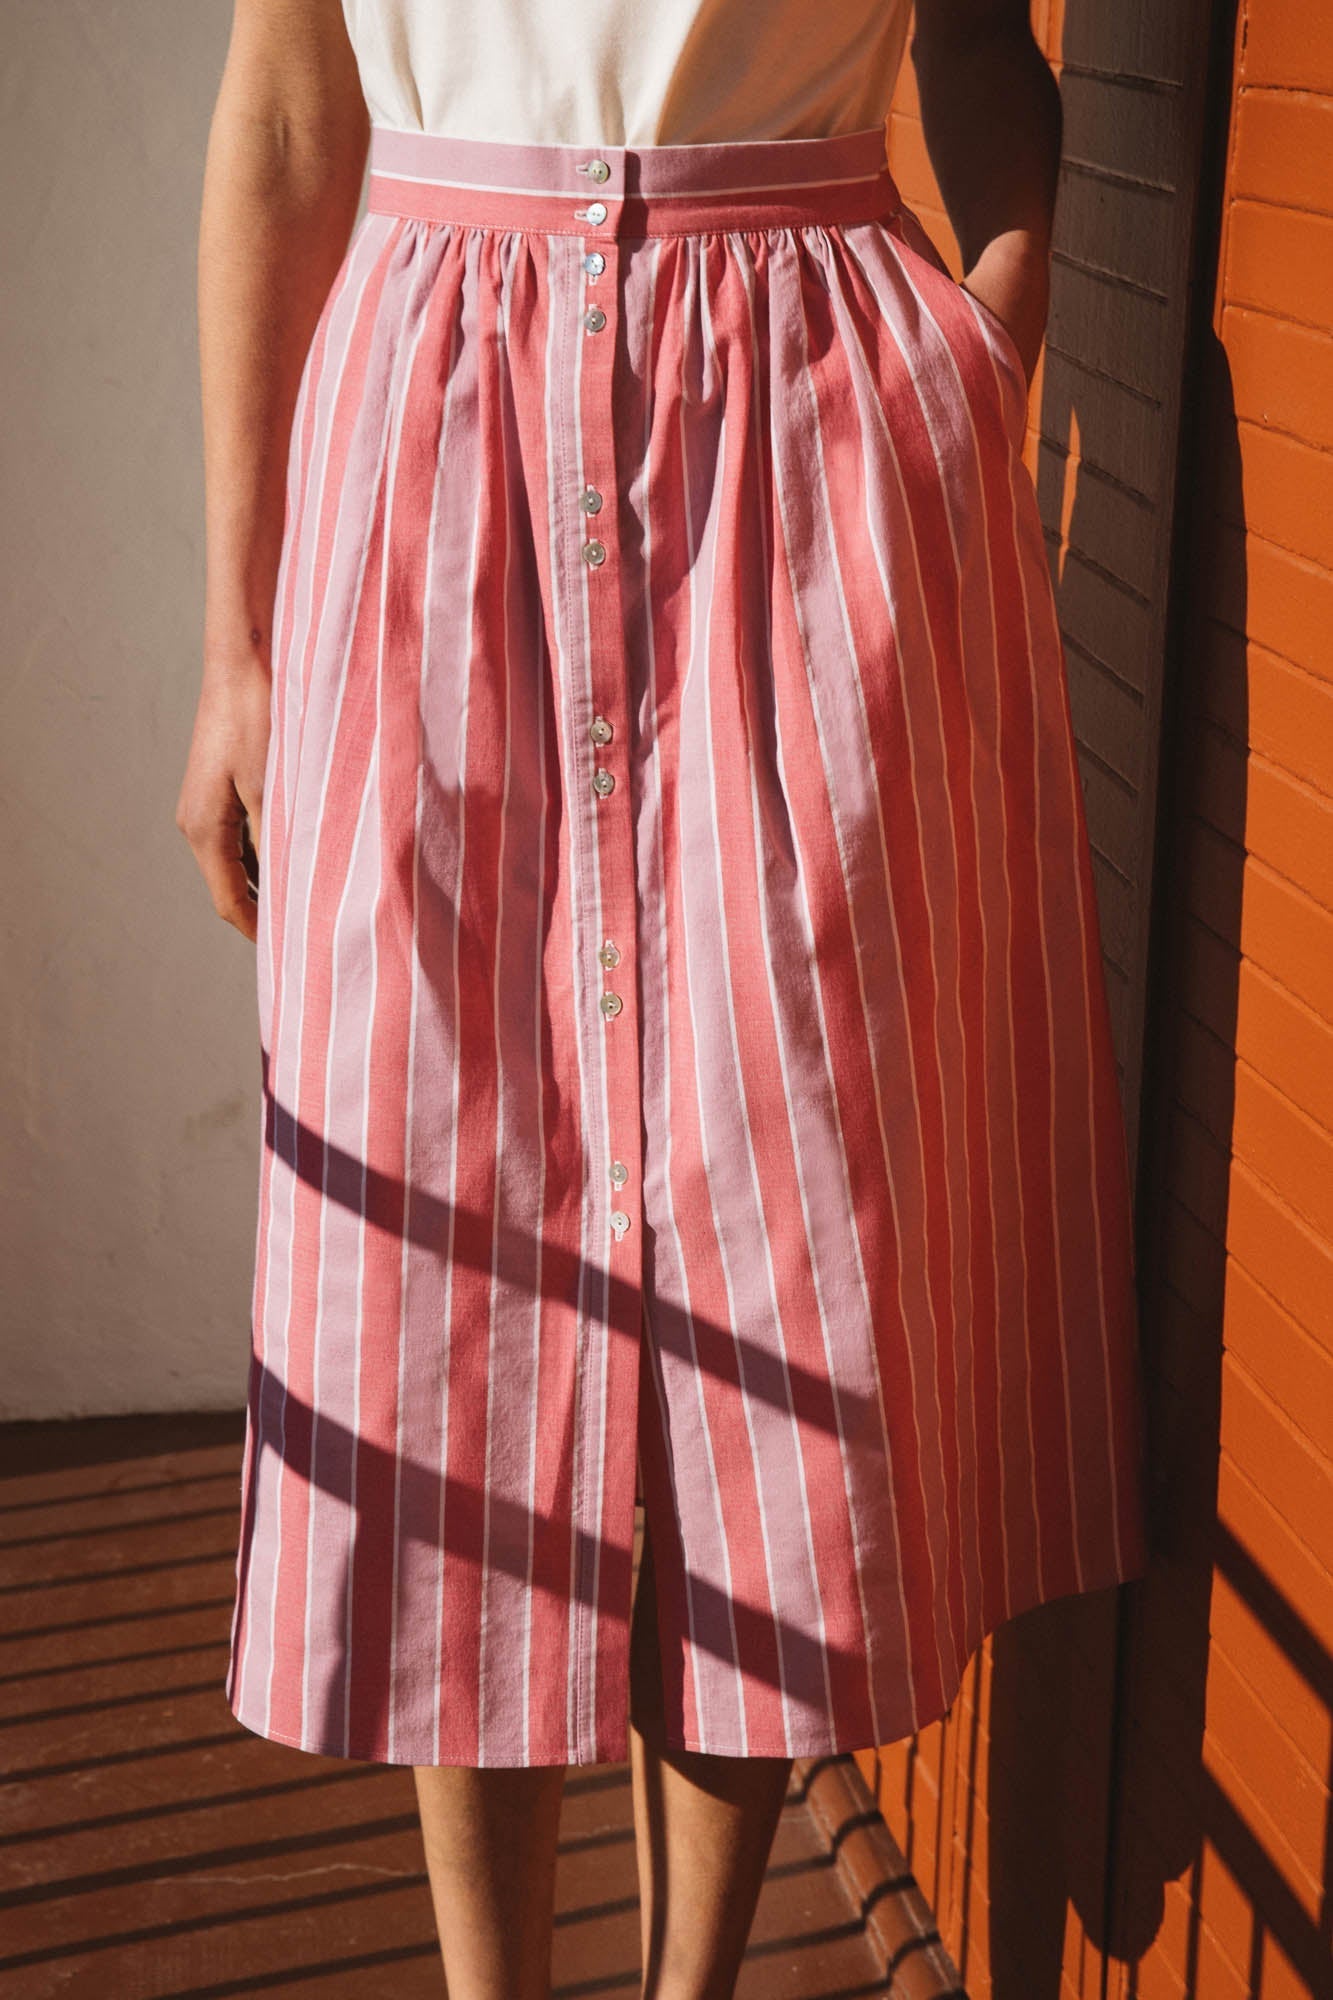 Sally pink striped skirt